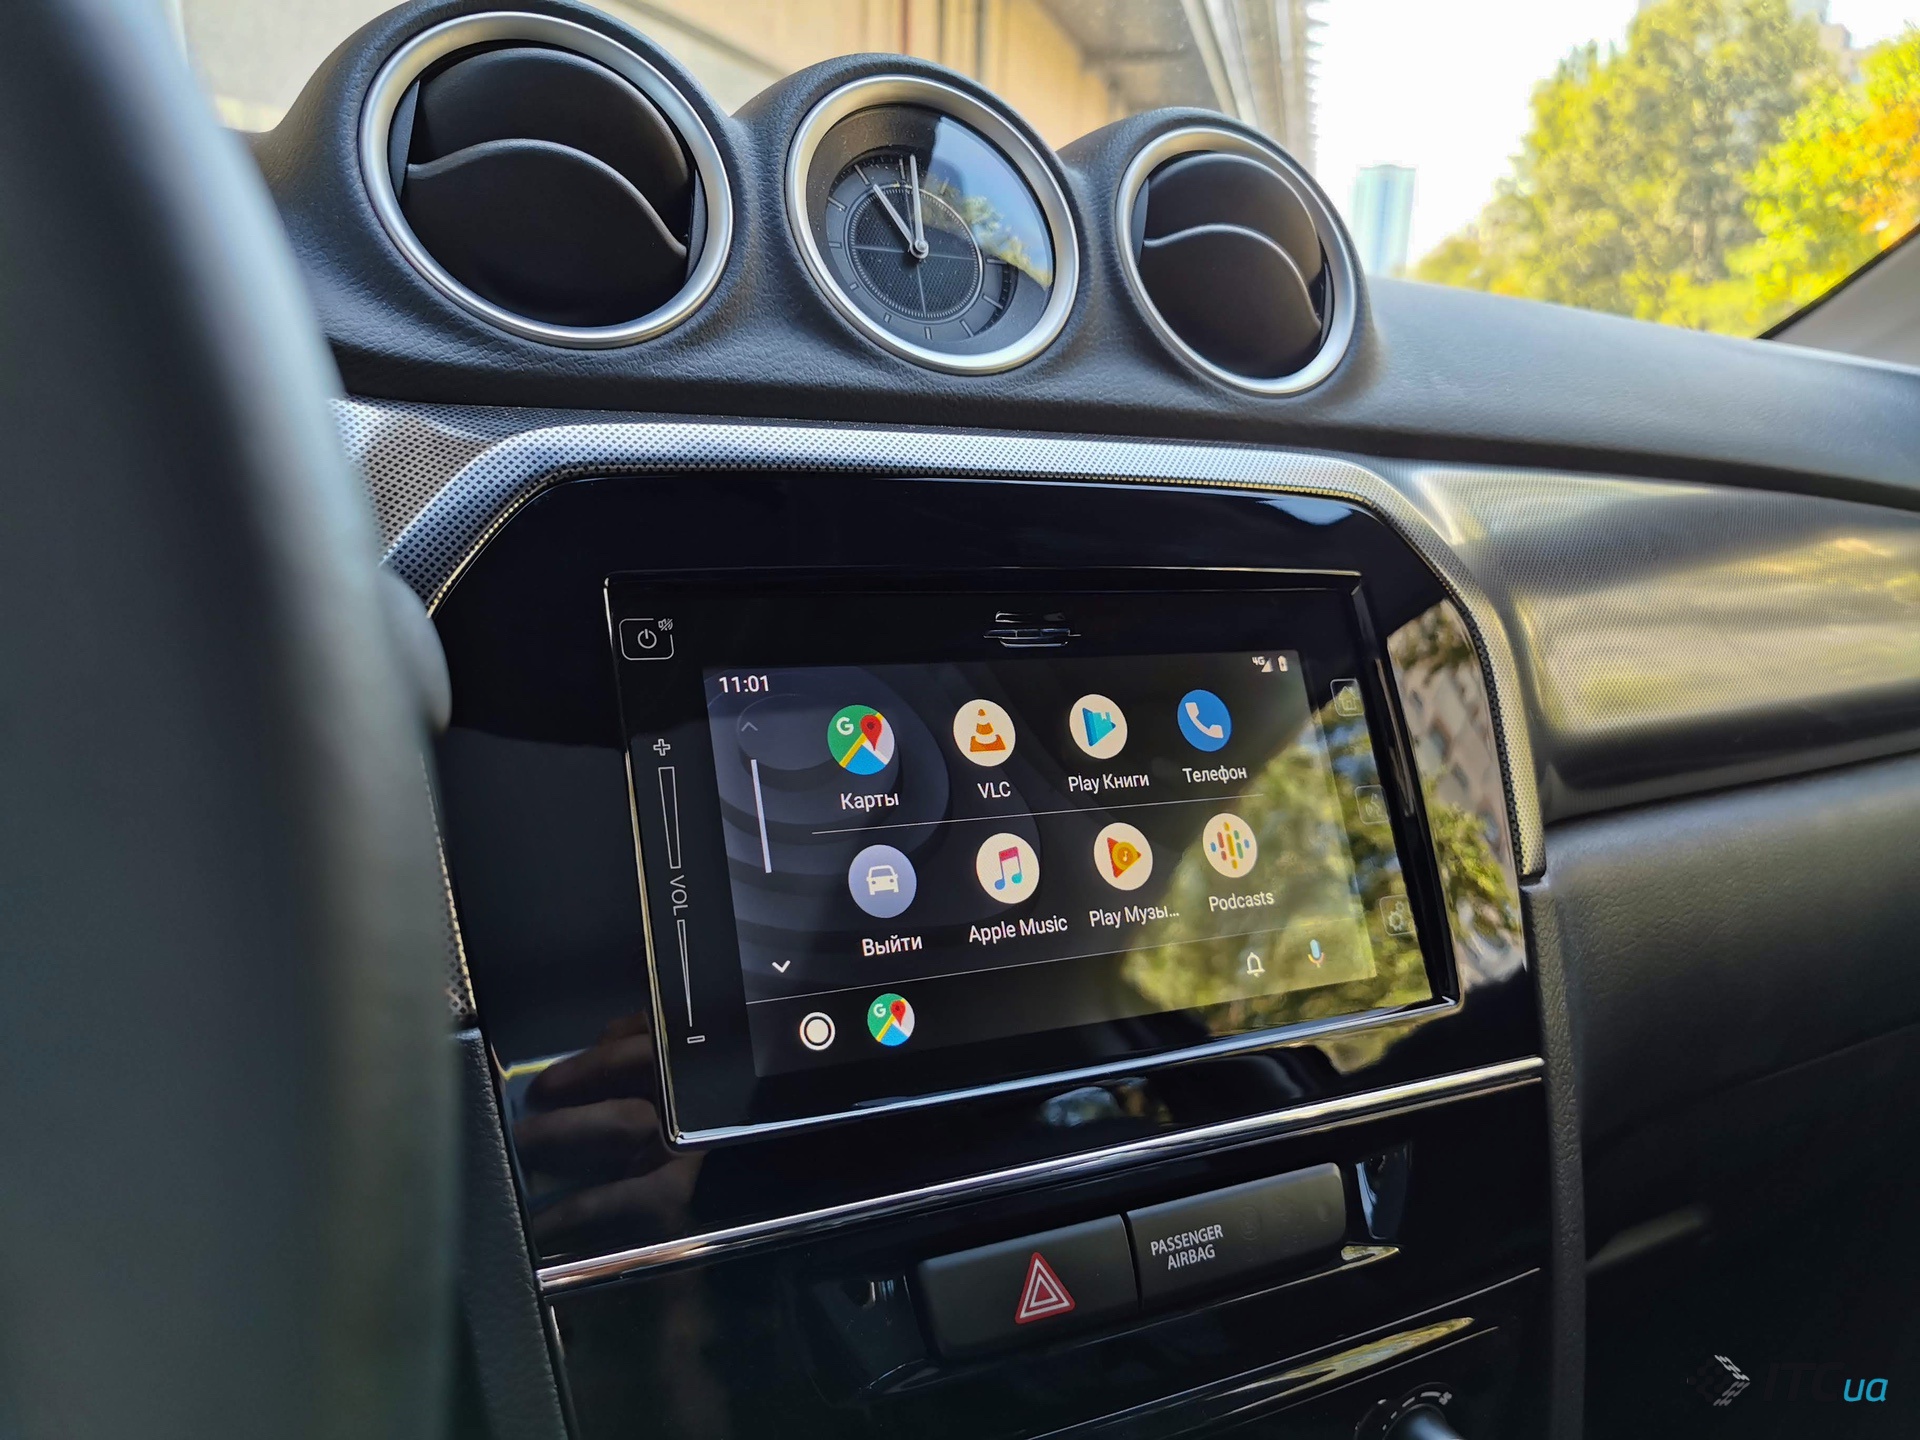 Андроид авто fermata. Android auto обновление. Интерфейс андроид авто новый. Android auto COOLWALK. Auto Focus kanal.